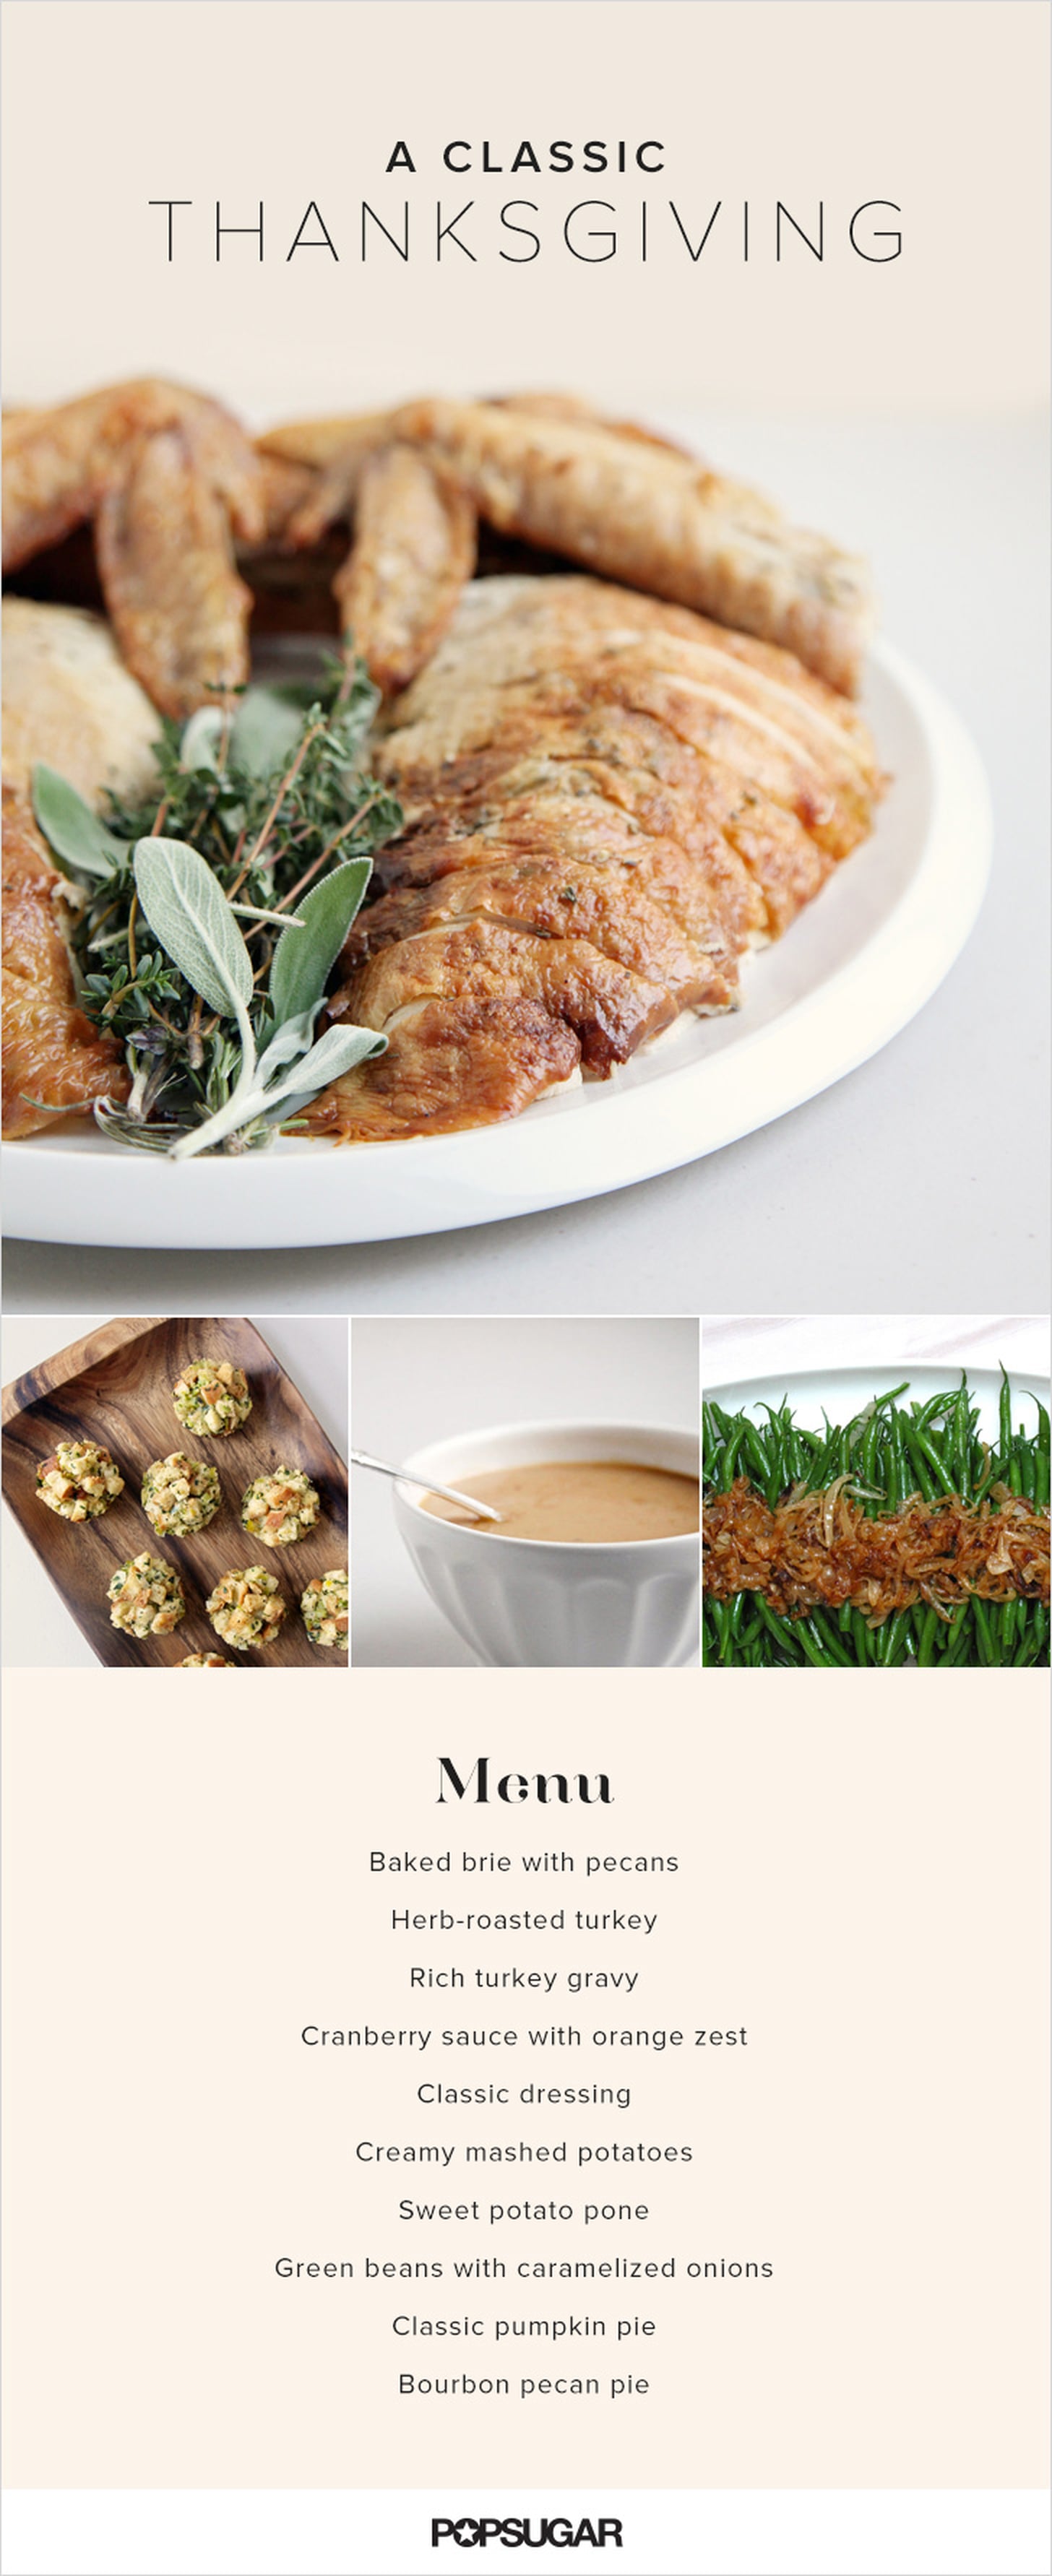 Thanksgiving Menu Ideas and Recipes | POPSUGAR Food